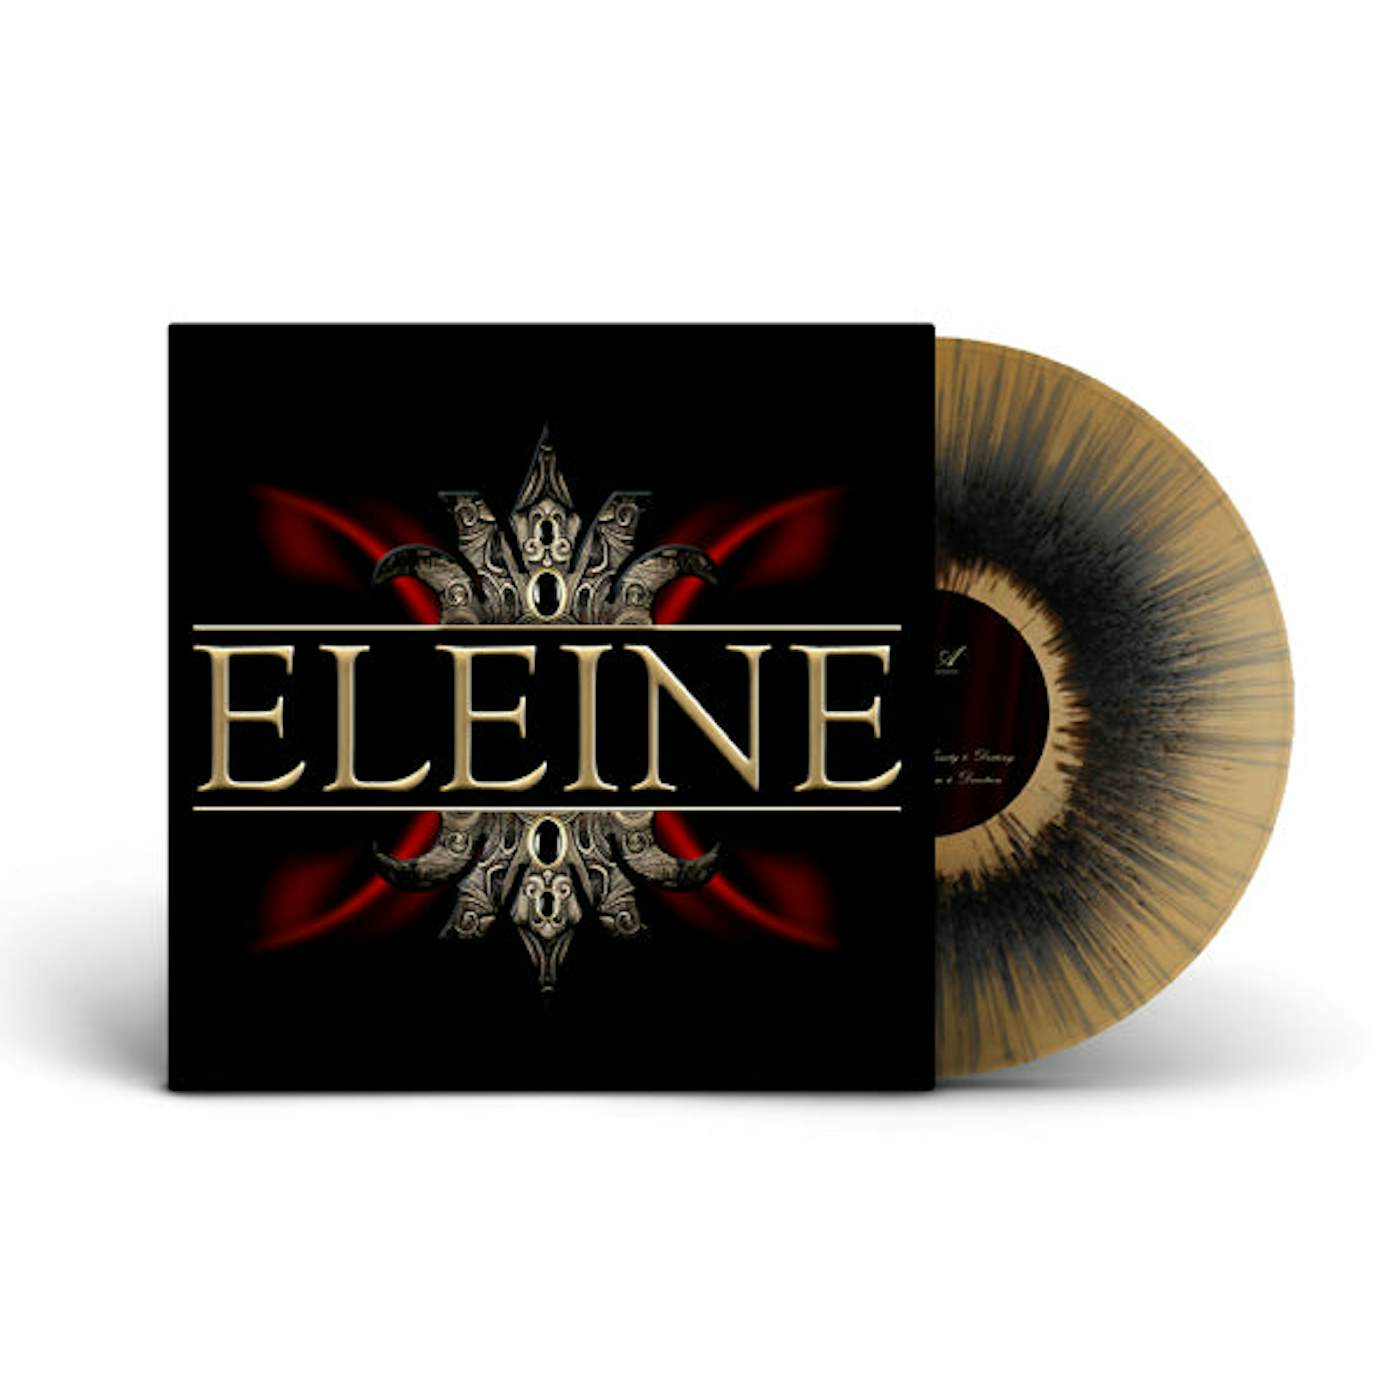  Eleine S/T (Gold / Black Splatter) Vinyl Record